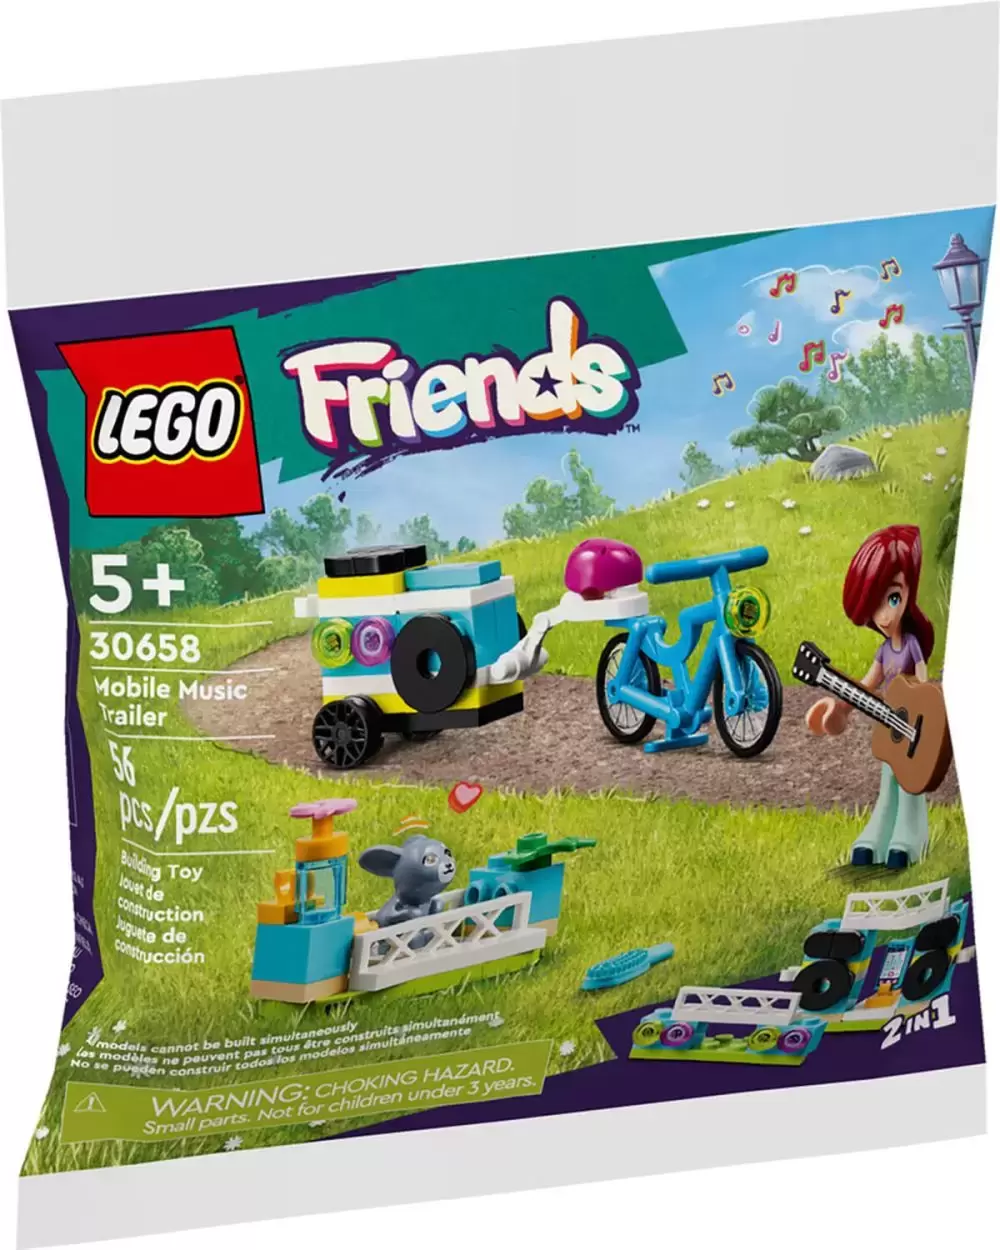 LEGO Friends - Mobile Music Trailer